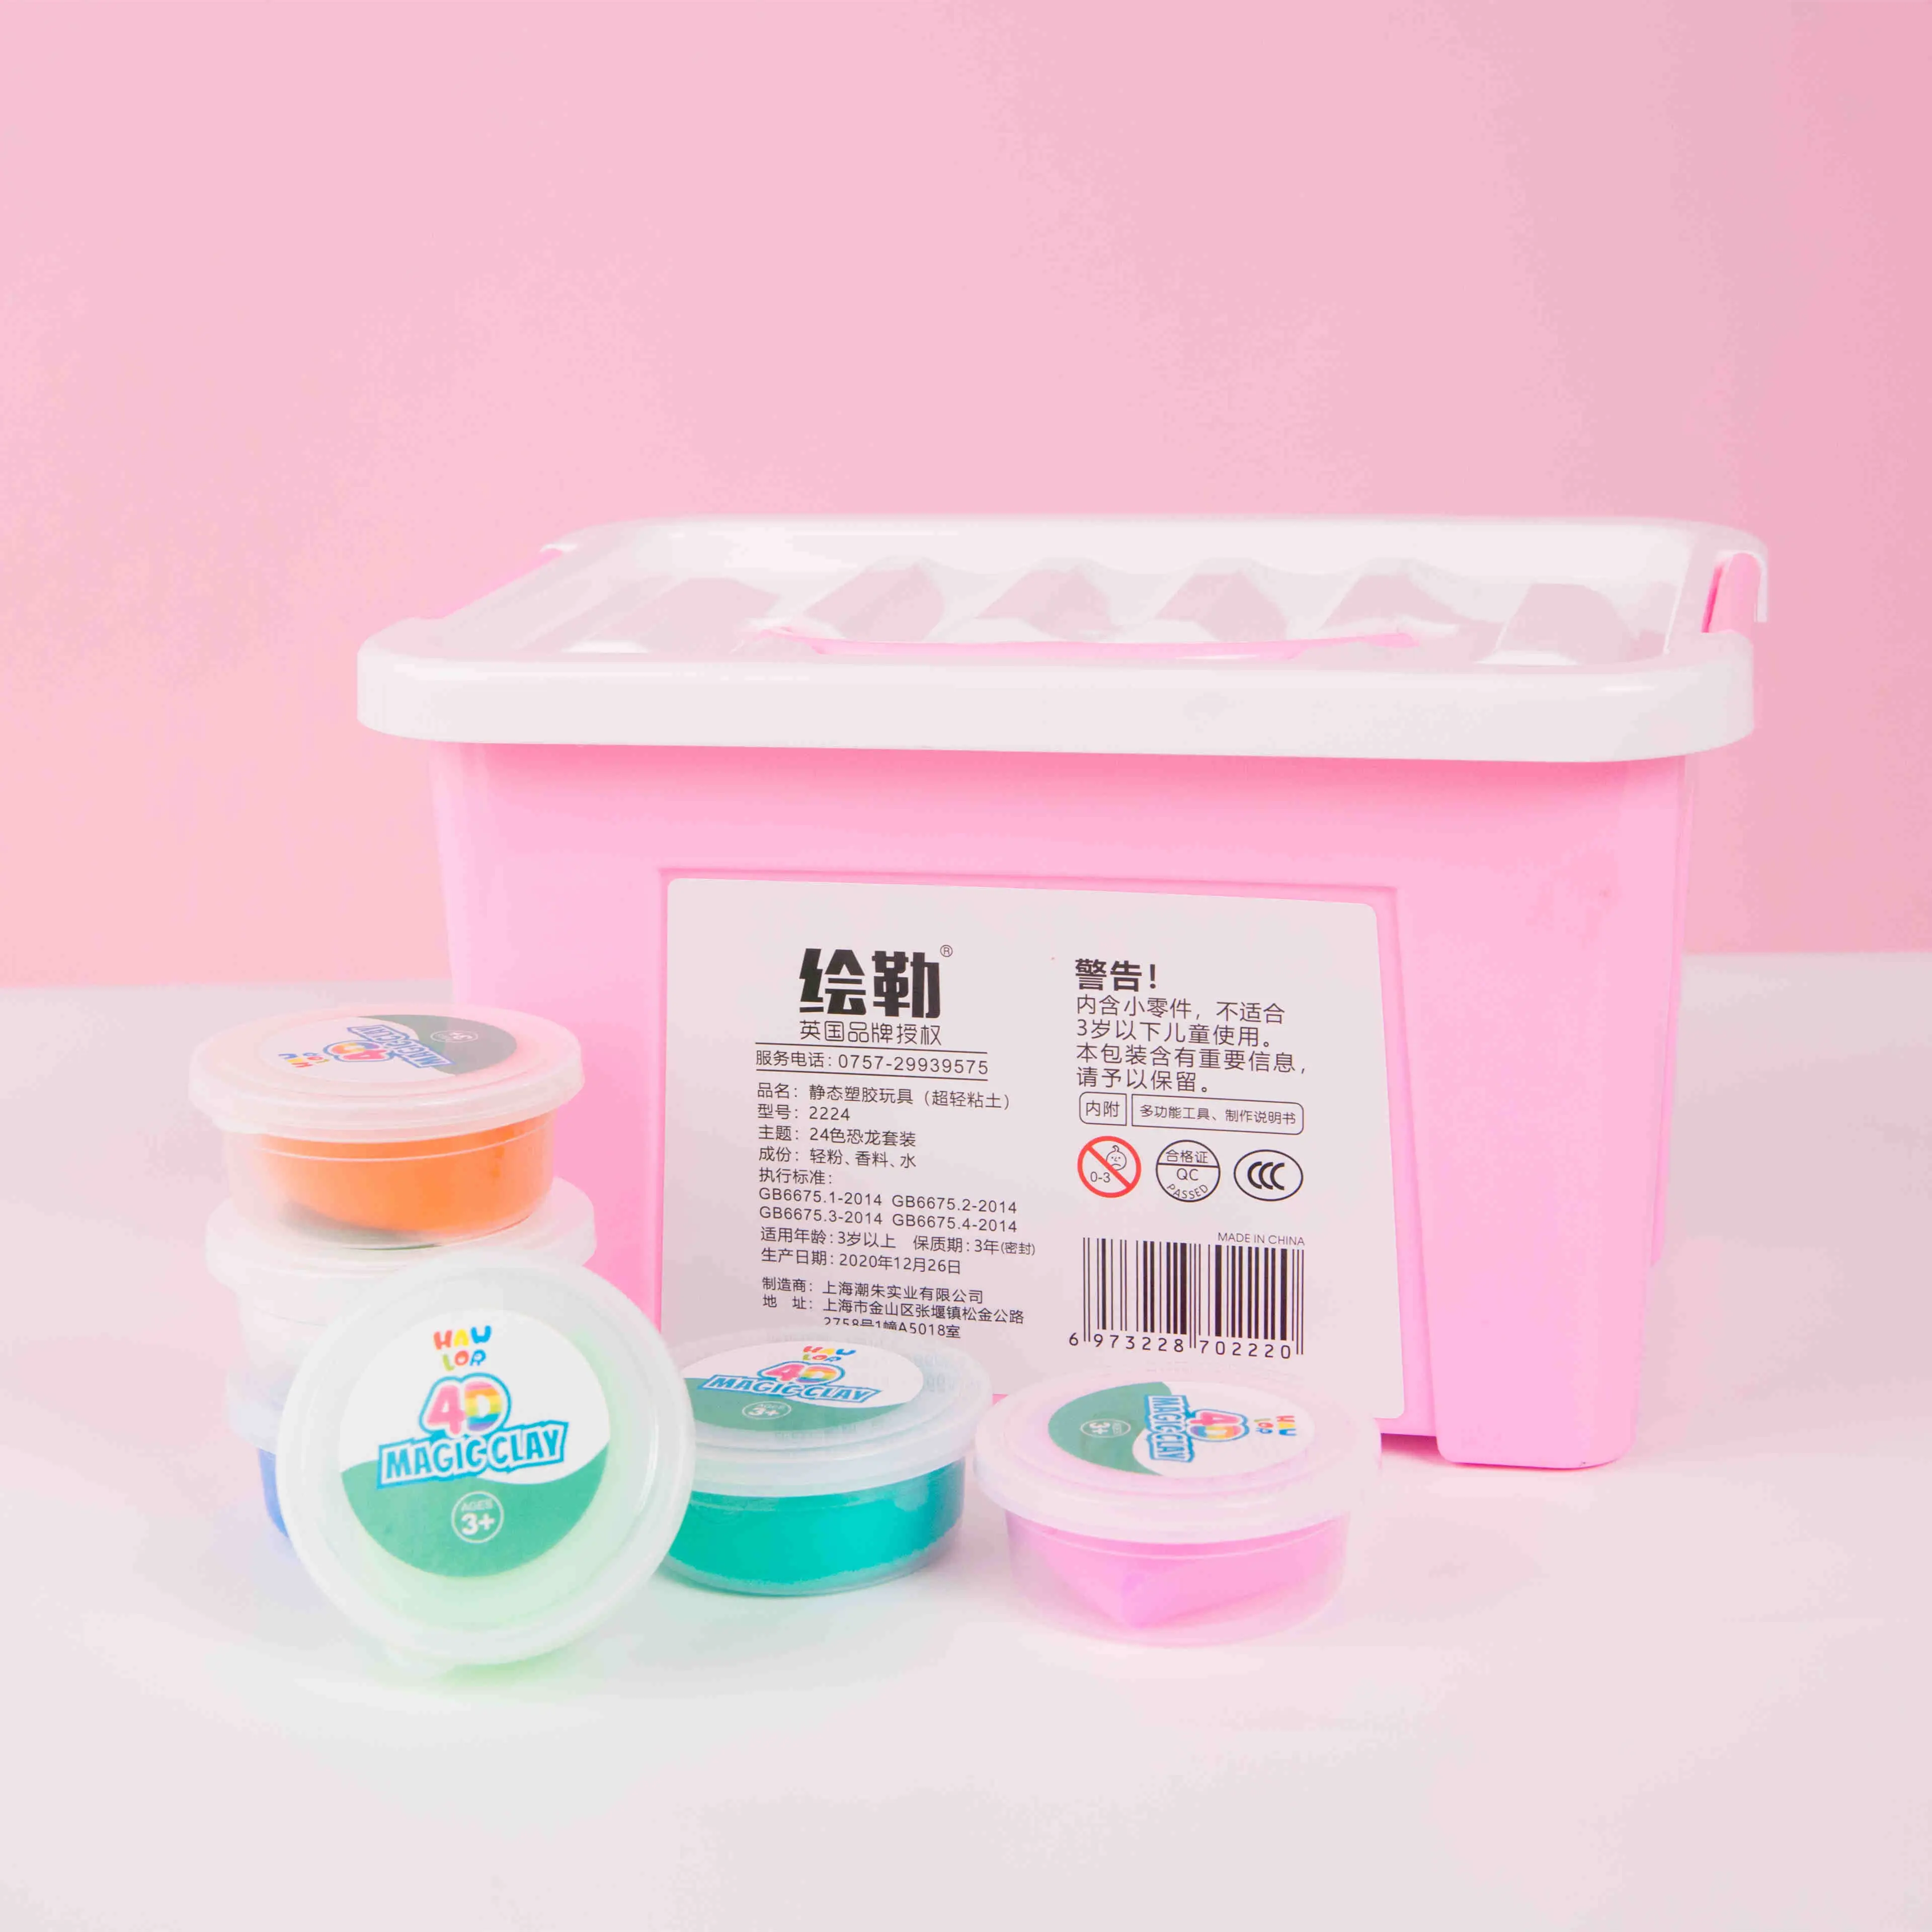 Manufactory Direct Magnetic Bouncing Shape Tubes Slime Kit Colourful Play Dough Set Kids